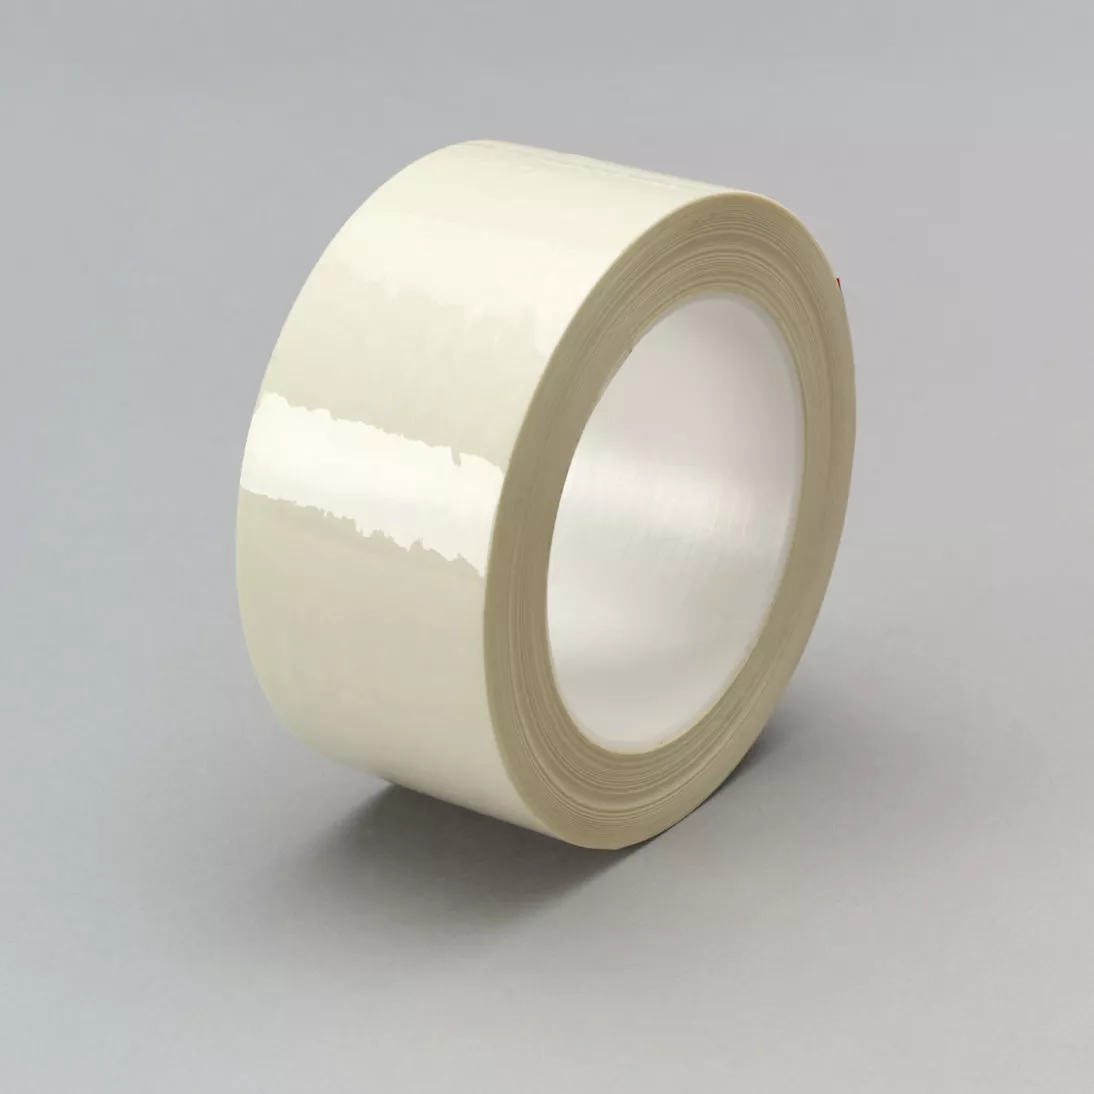 3M™ High Temperature Nylon Film Tape 8555, White, 2 in x 72 yd, 7 mil,
24 rolls per case